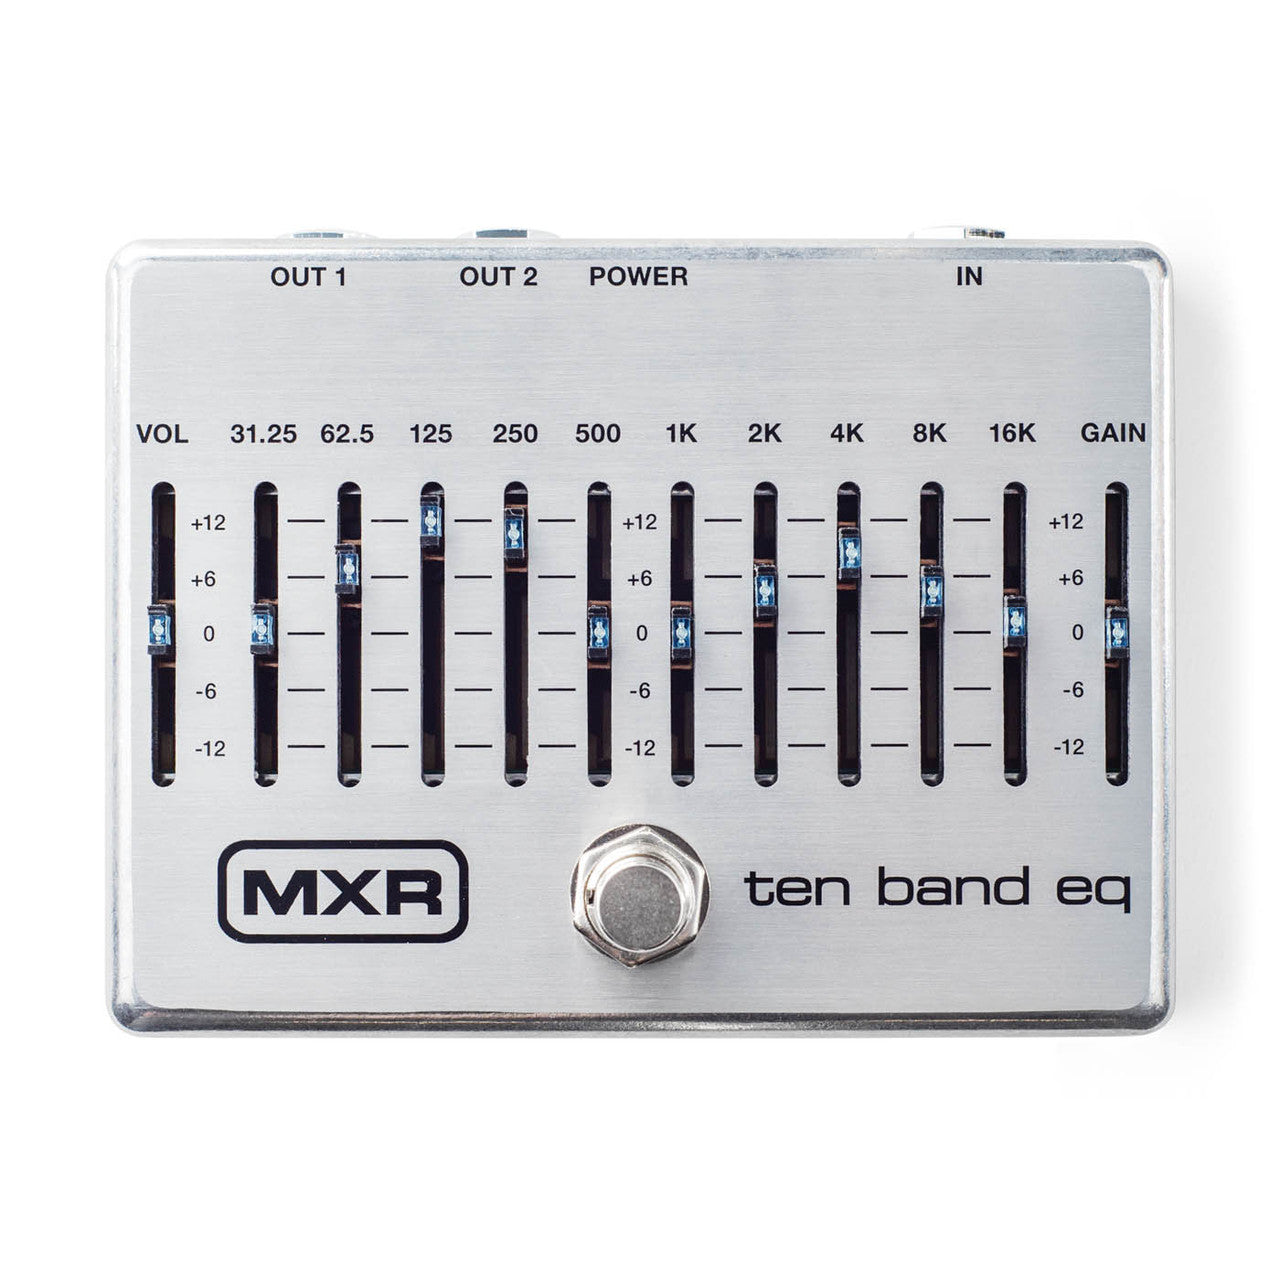 MXR 10 Band Graphic Equalizer